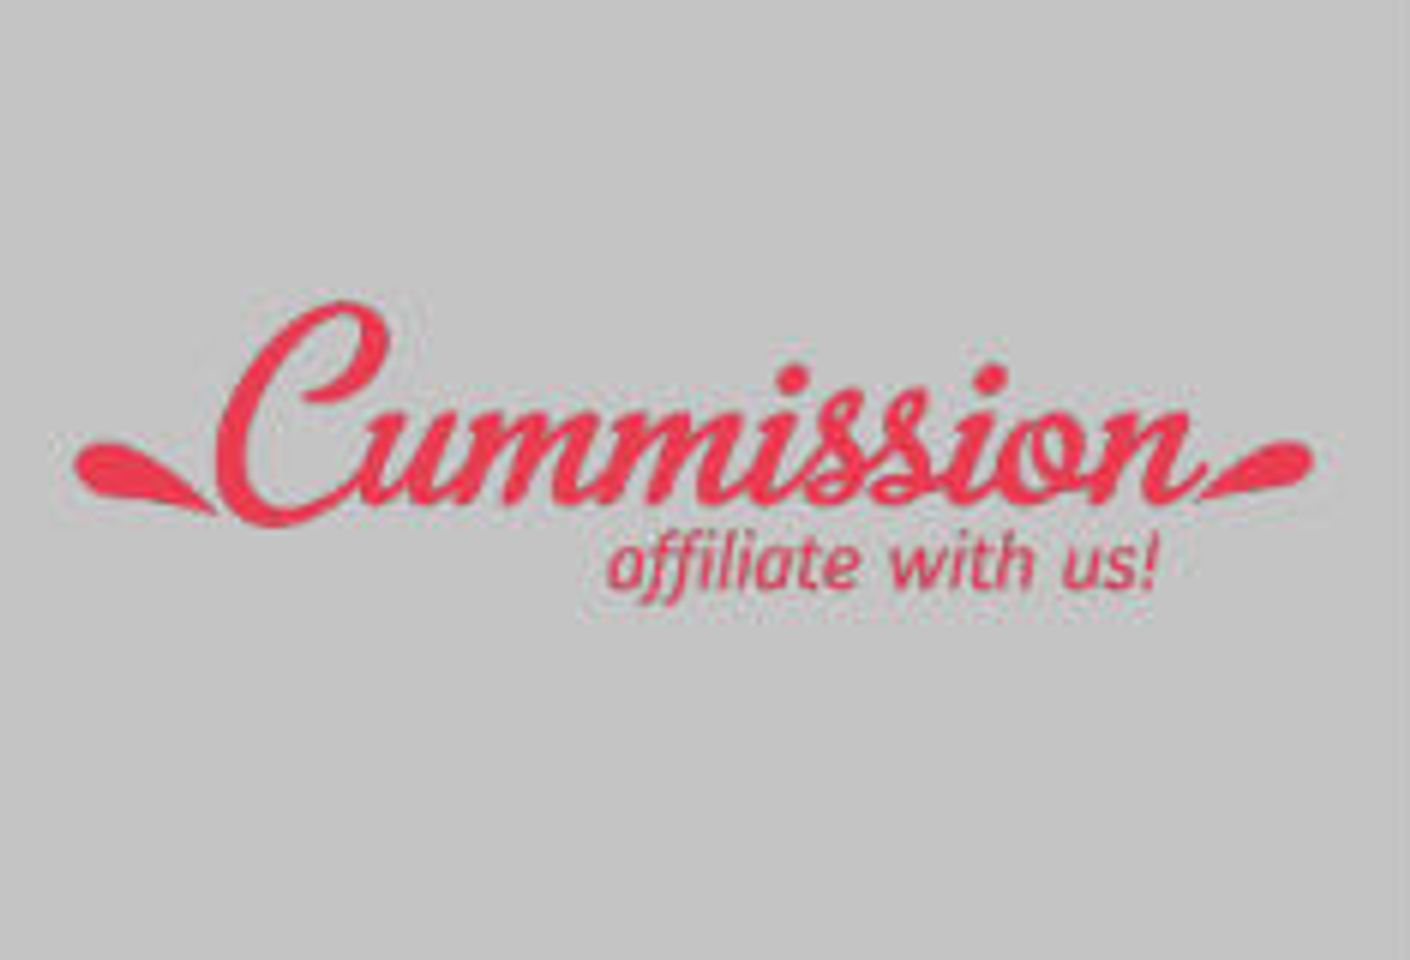 Cummission.com Launches as Affiliate Program for Fuckbook.com